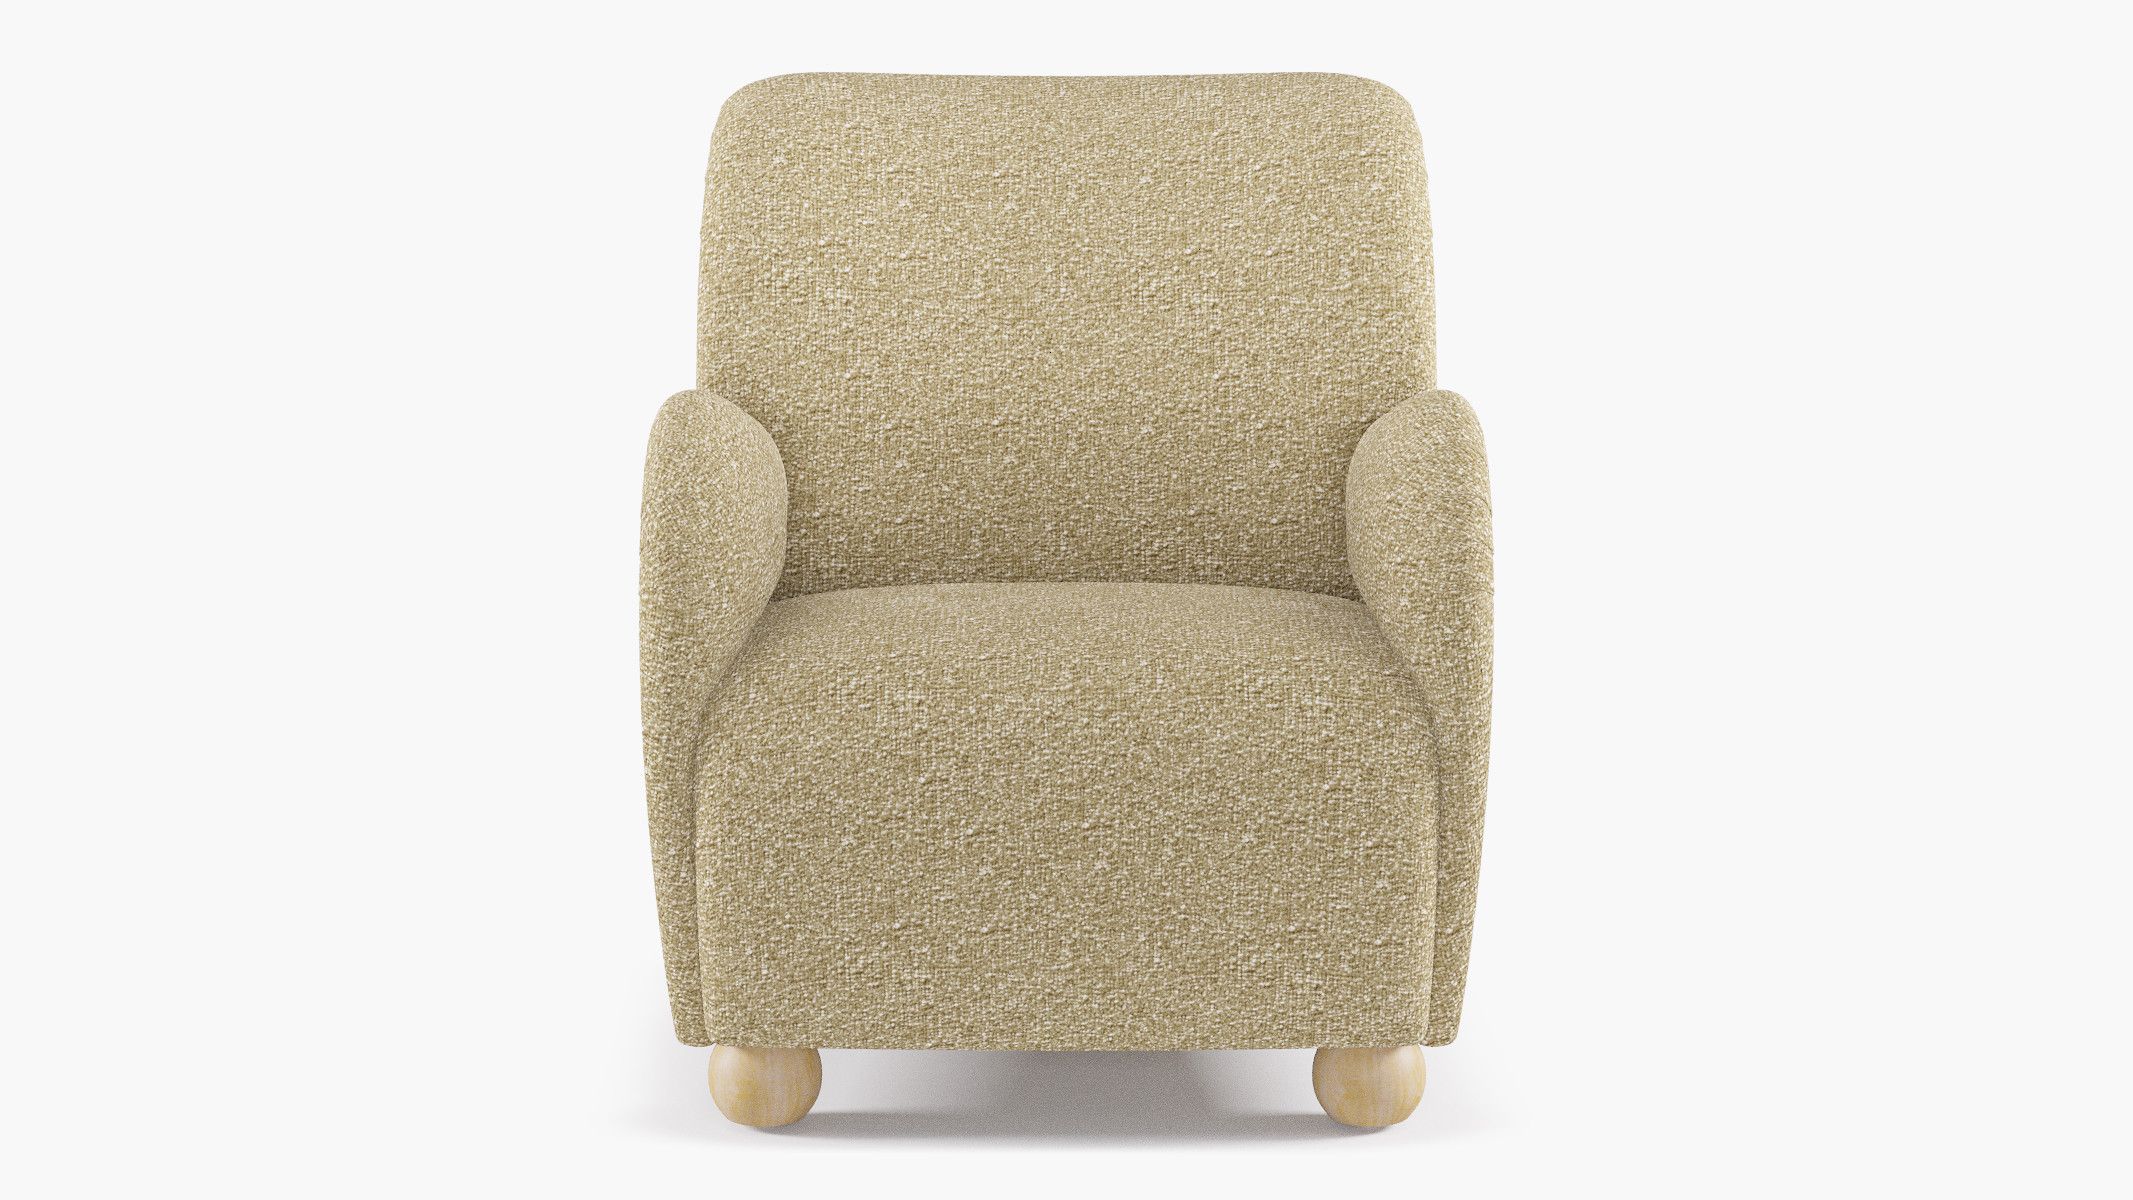 Bun Foot Accent Chair | The Inside